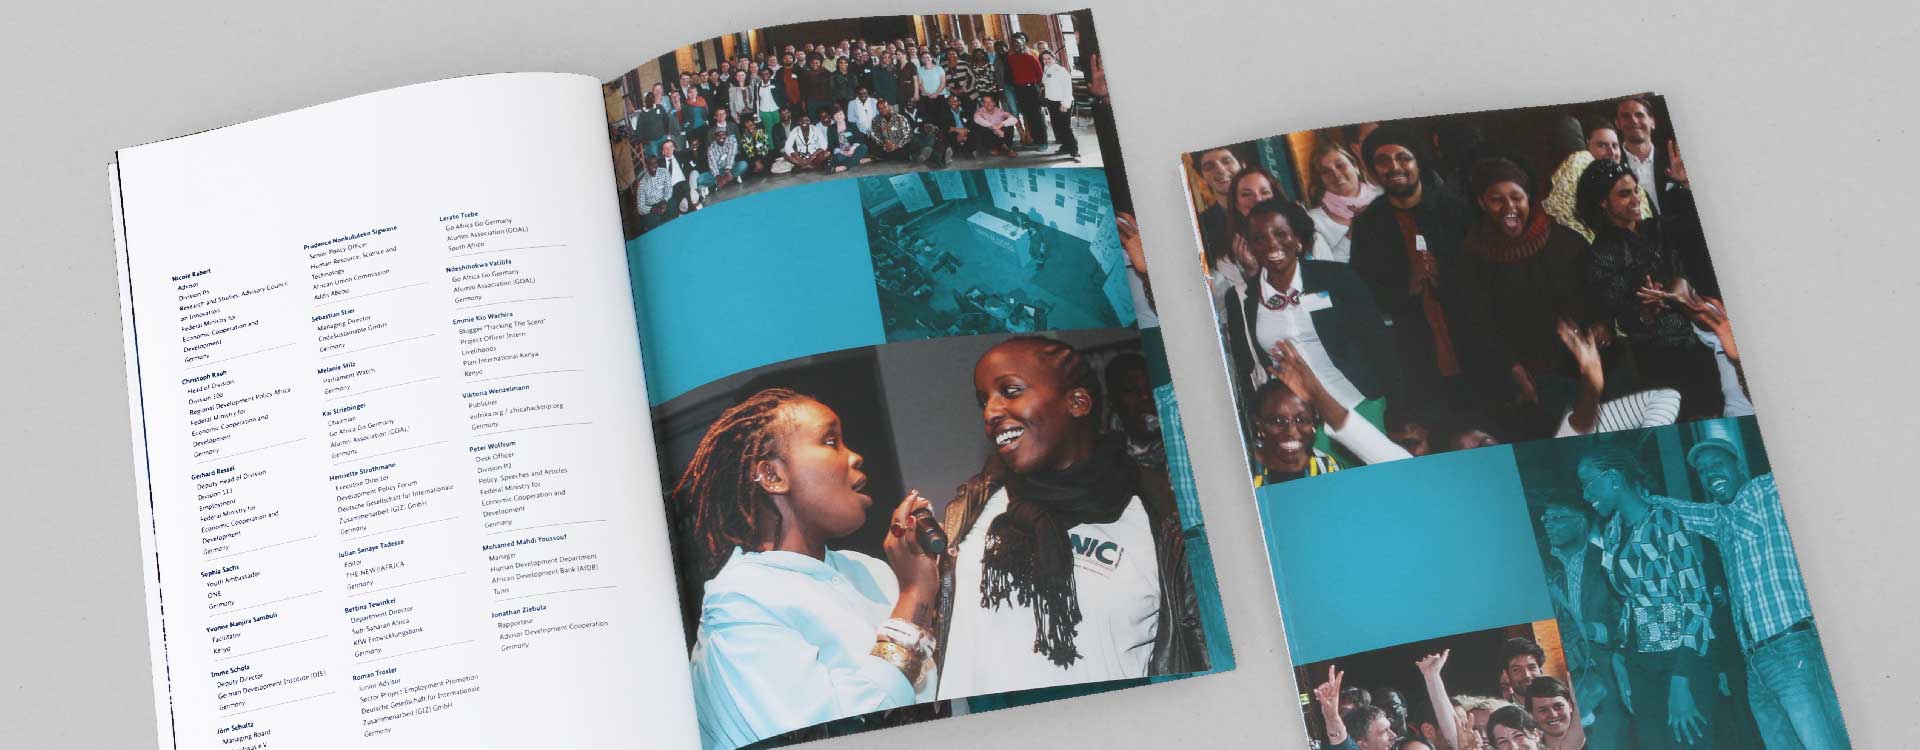 Documentation for the Youth in Africa conference held by the BMZ in the Umspannwerk Kreuzberg, Berlin; Design: Kattrin Richter | Graphic Design Studio